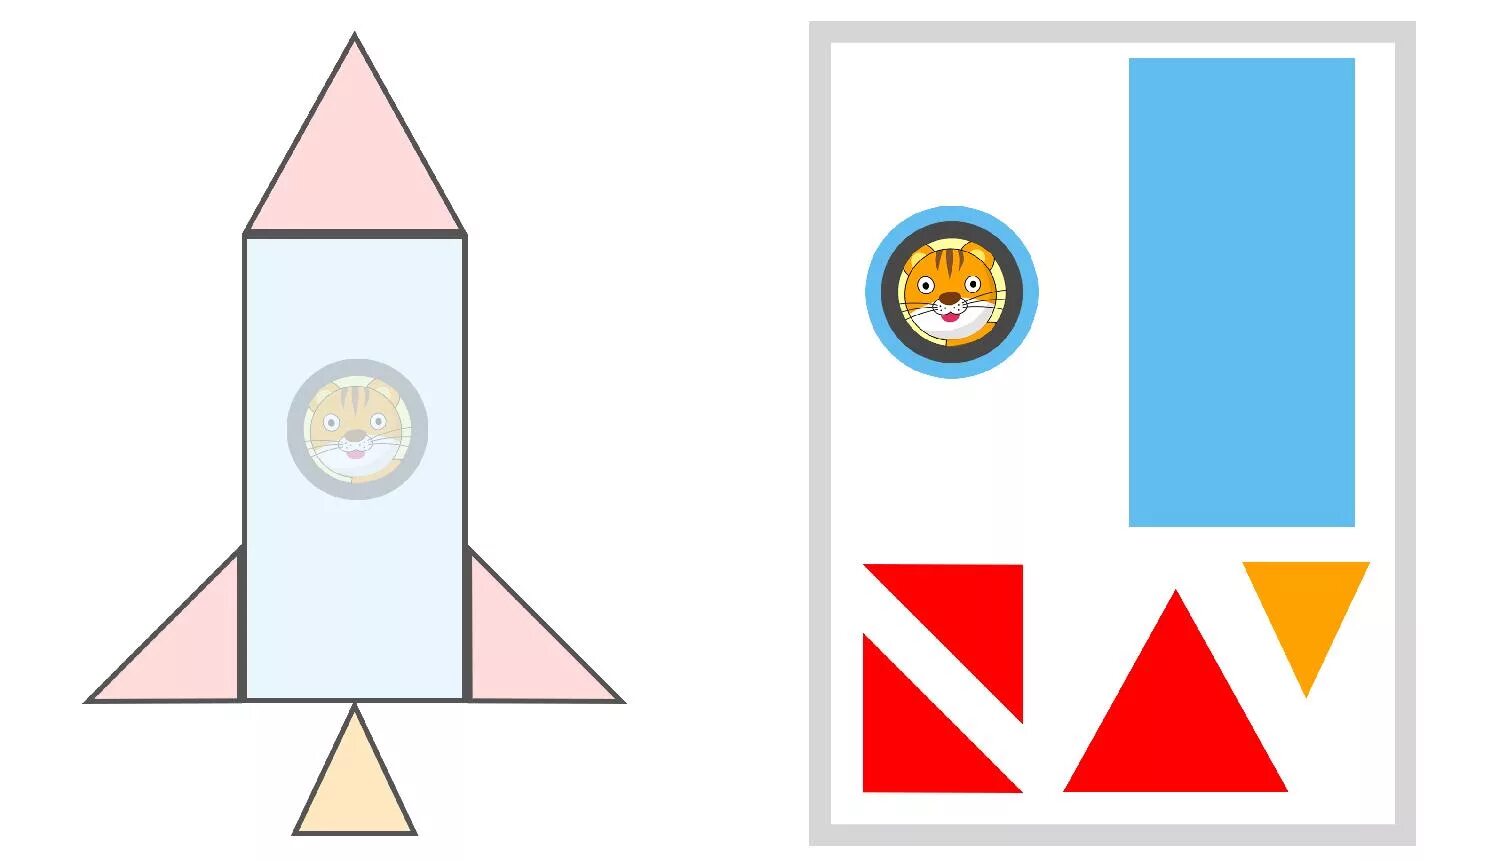 Ракета аппликация для детей 6 7 лет. Аппликация ракета из геометрических фигур. Аппликация из геометрических фигур для детей ракета. Ракета из геометрических фигур для детей. Заготовки ракеты для аппликации.